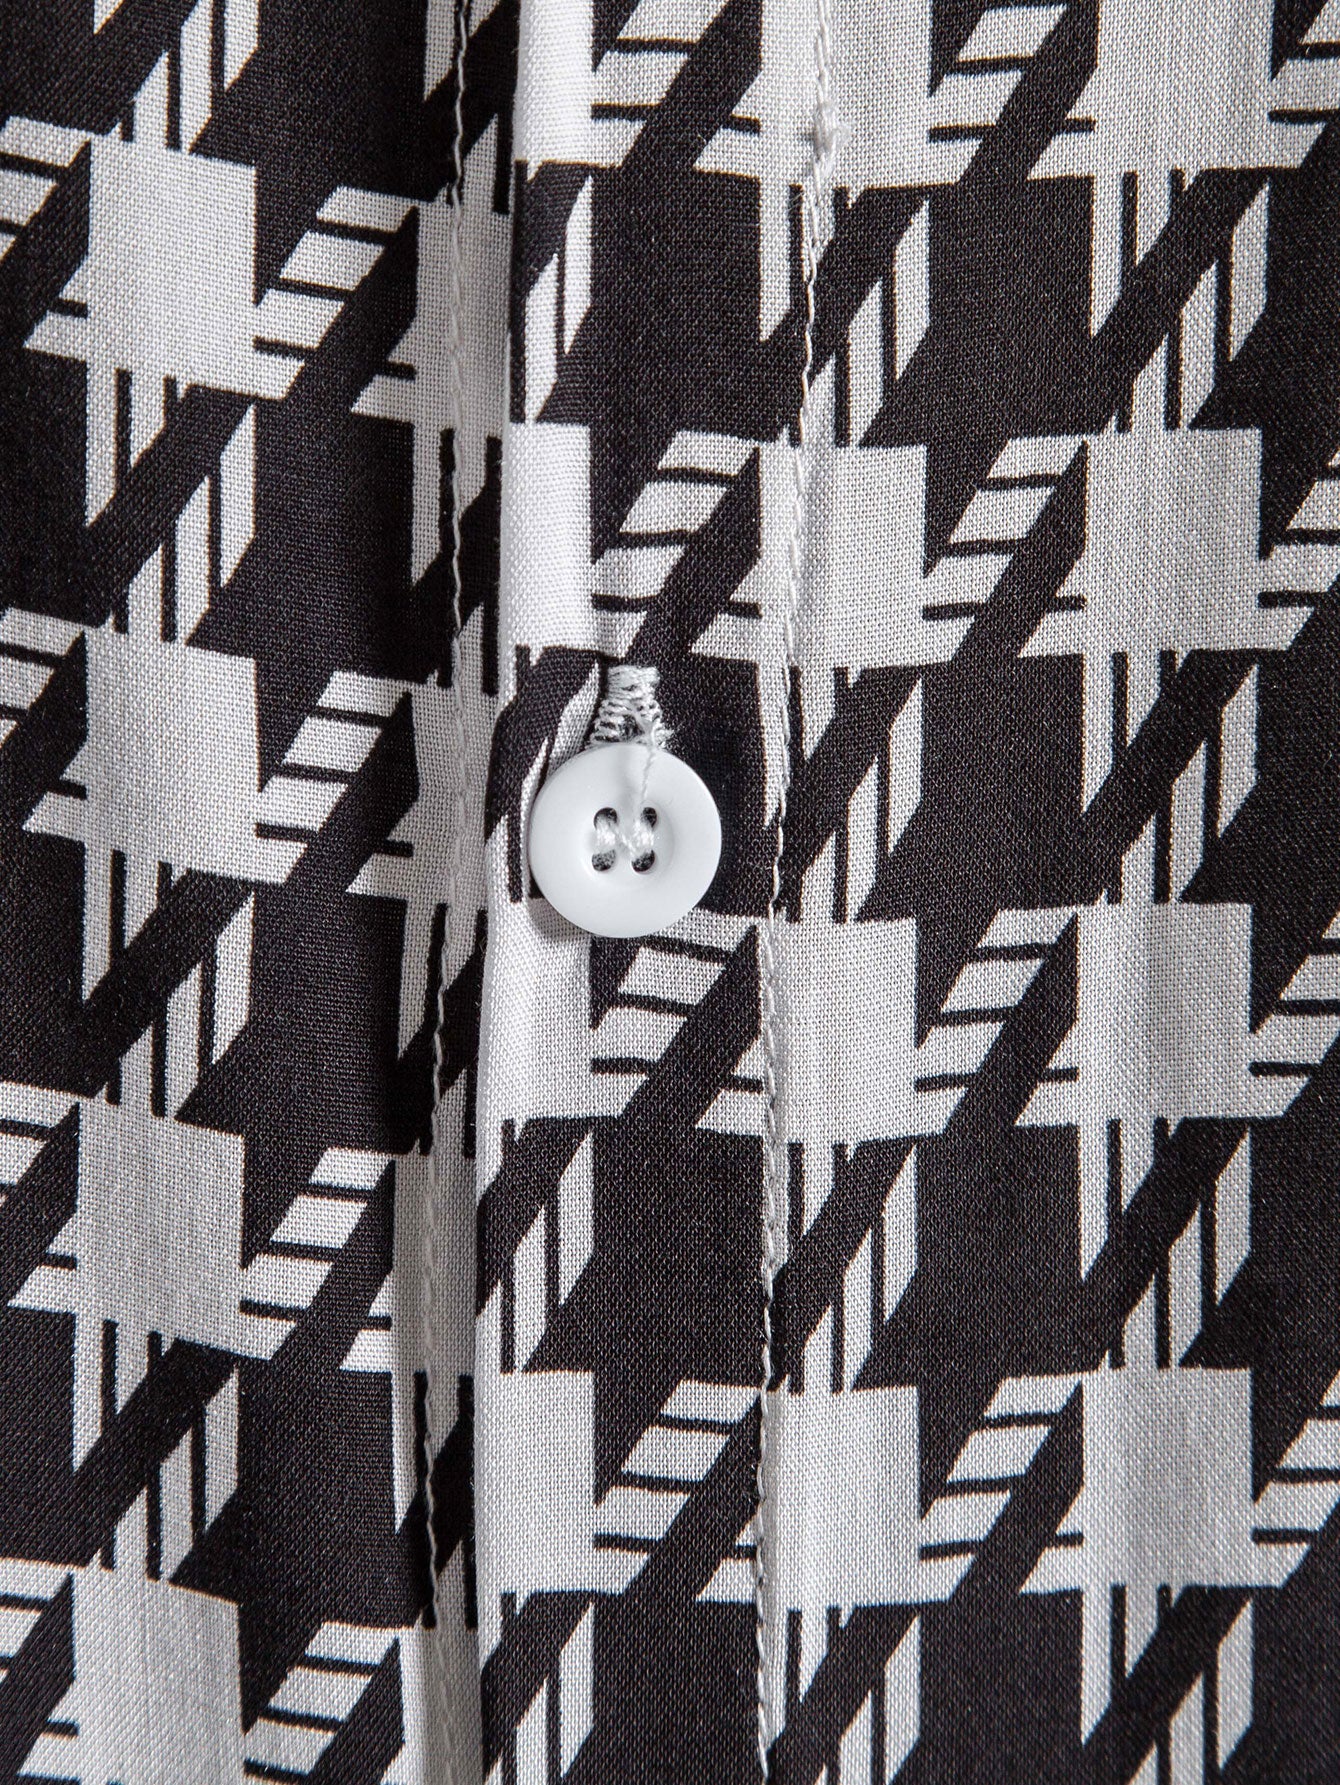 Black And White Geometric Print Shirt